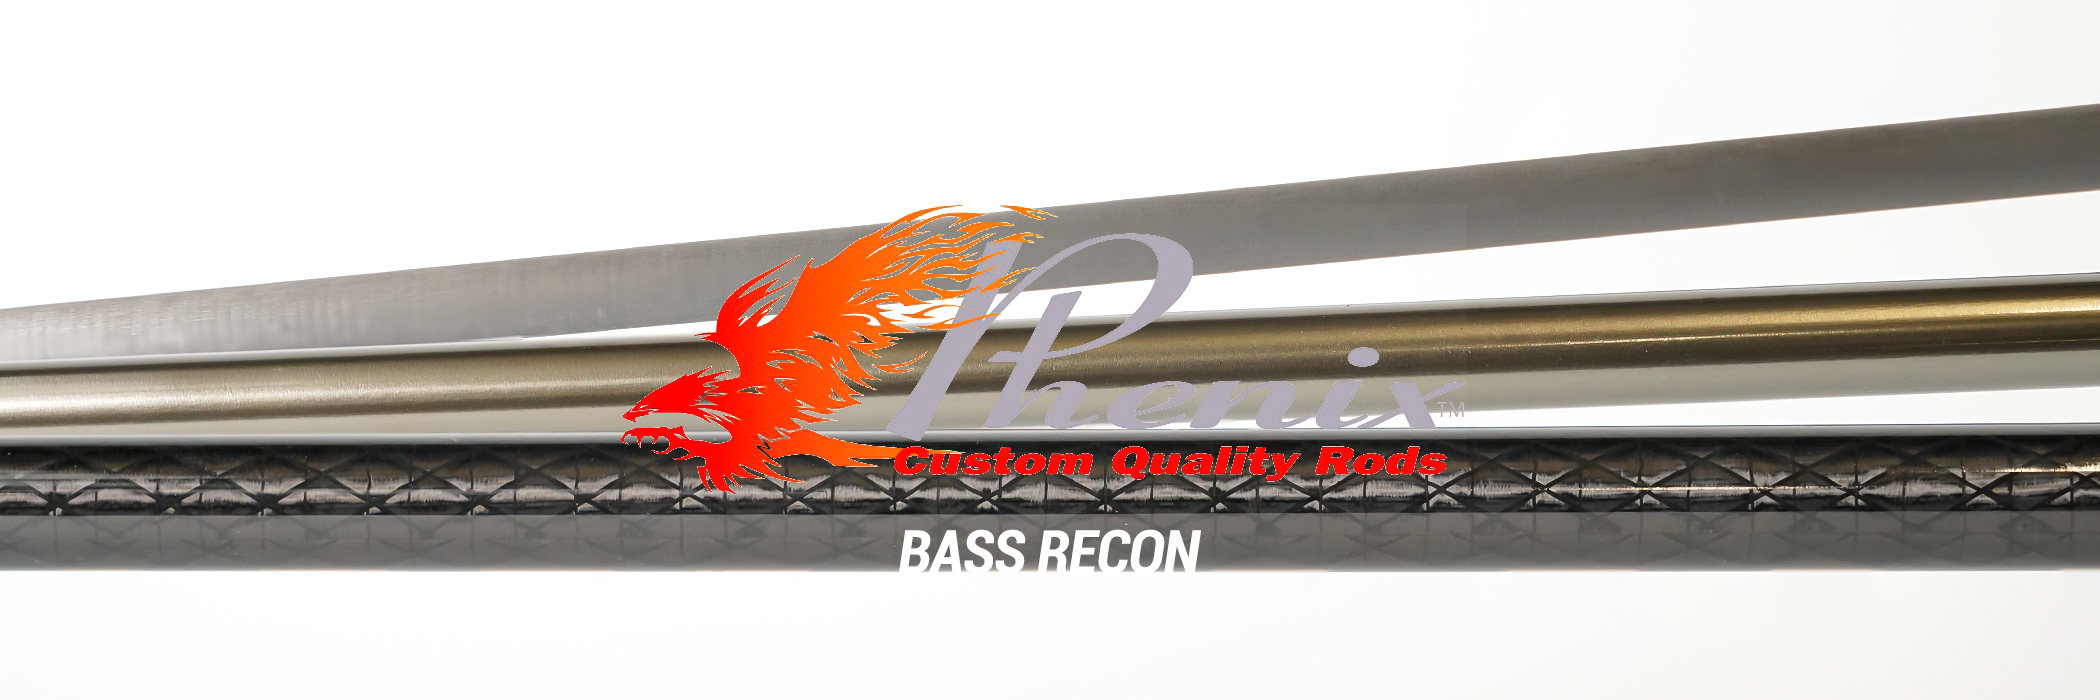 Phenix - Bass Recon